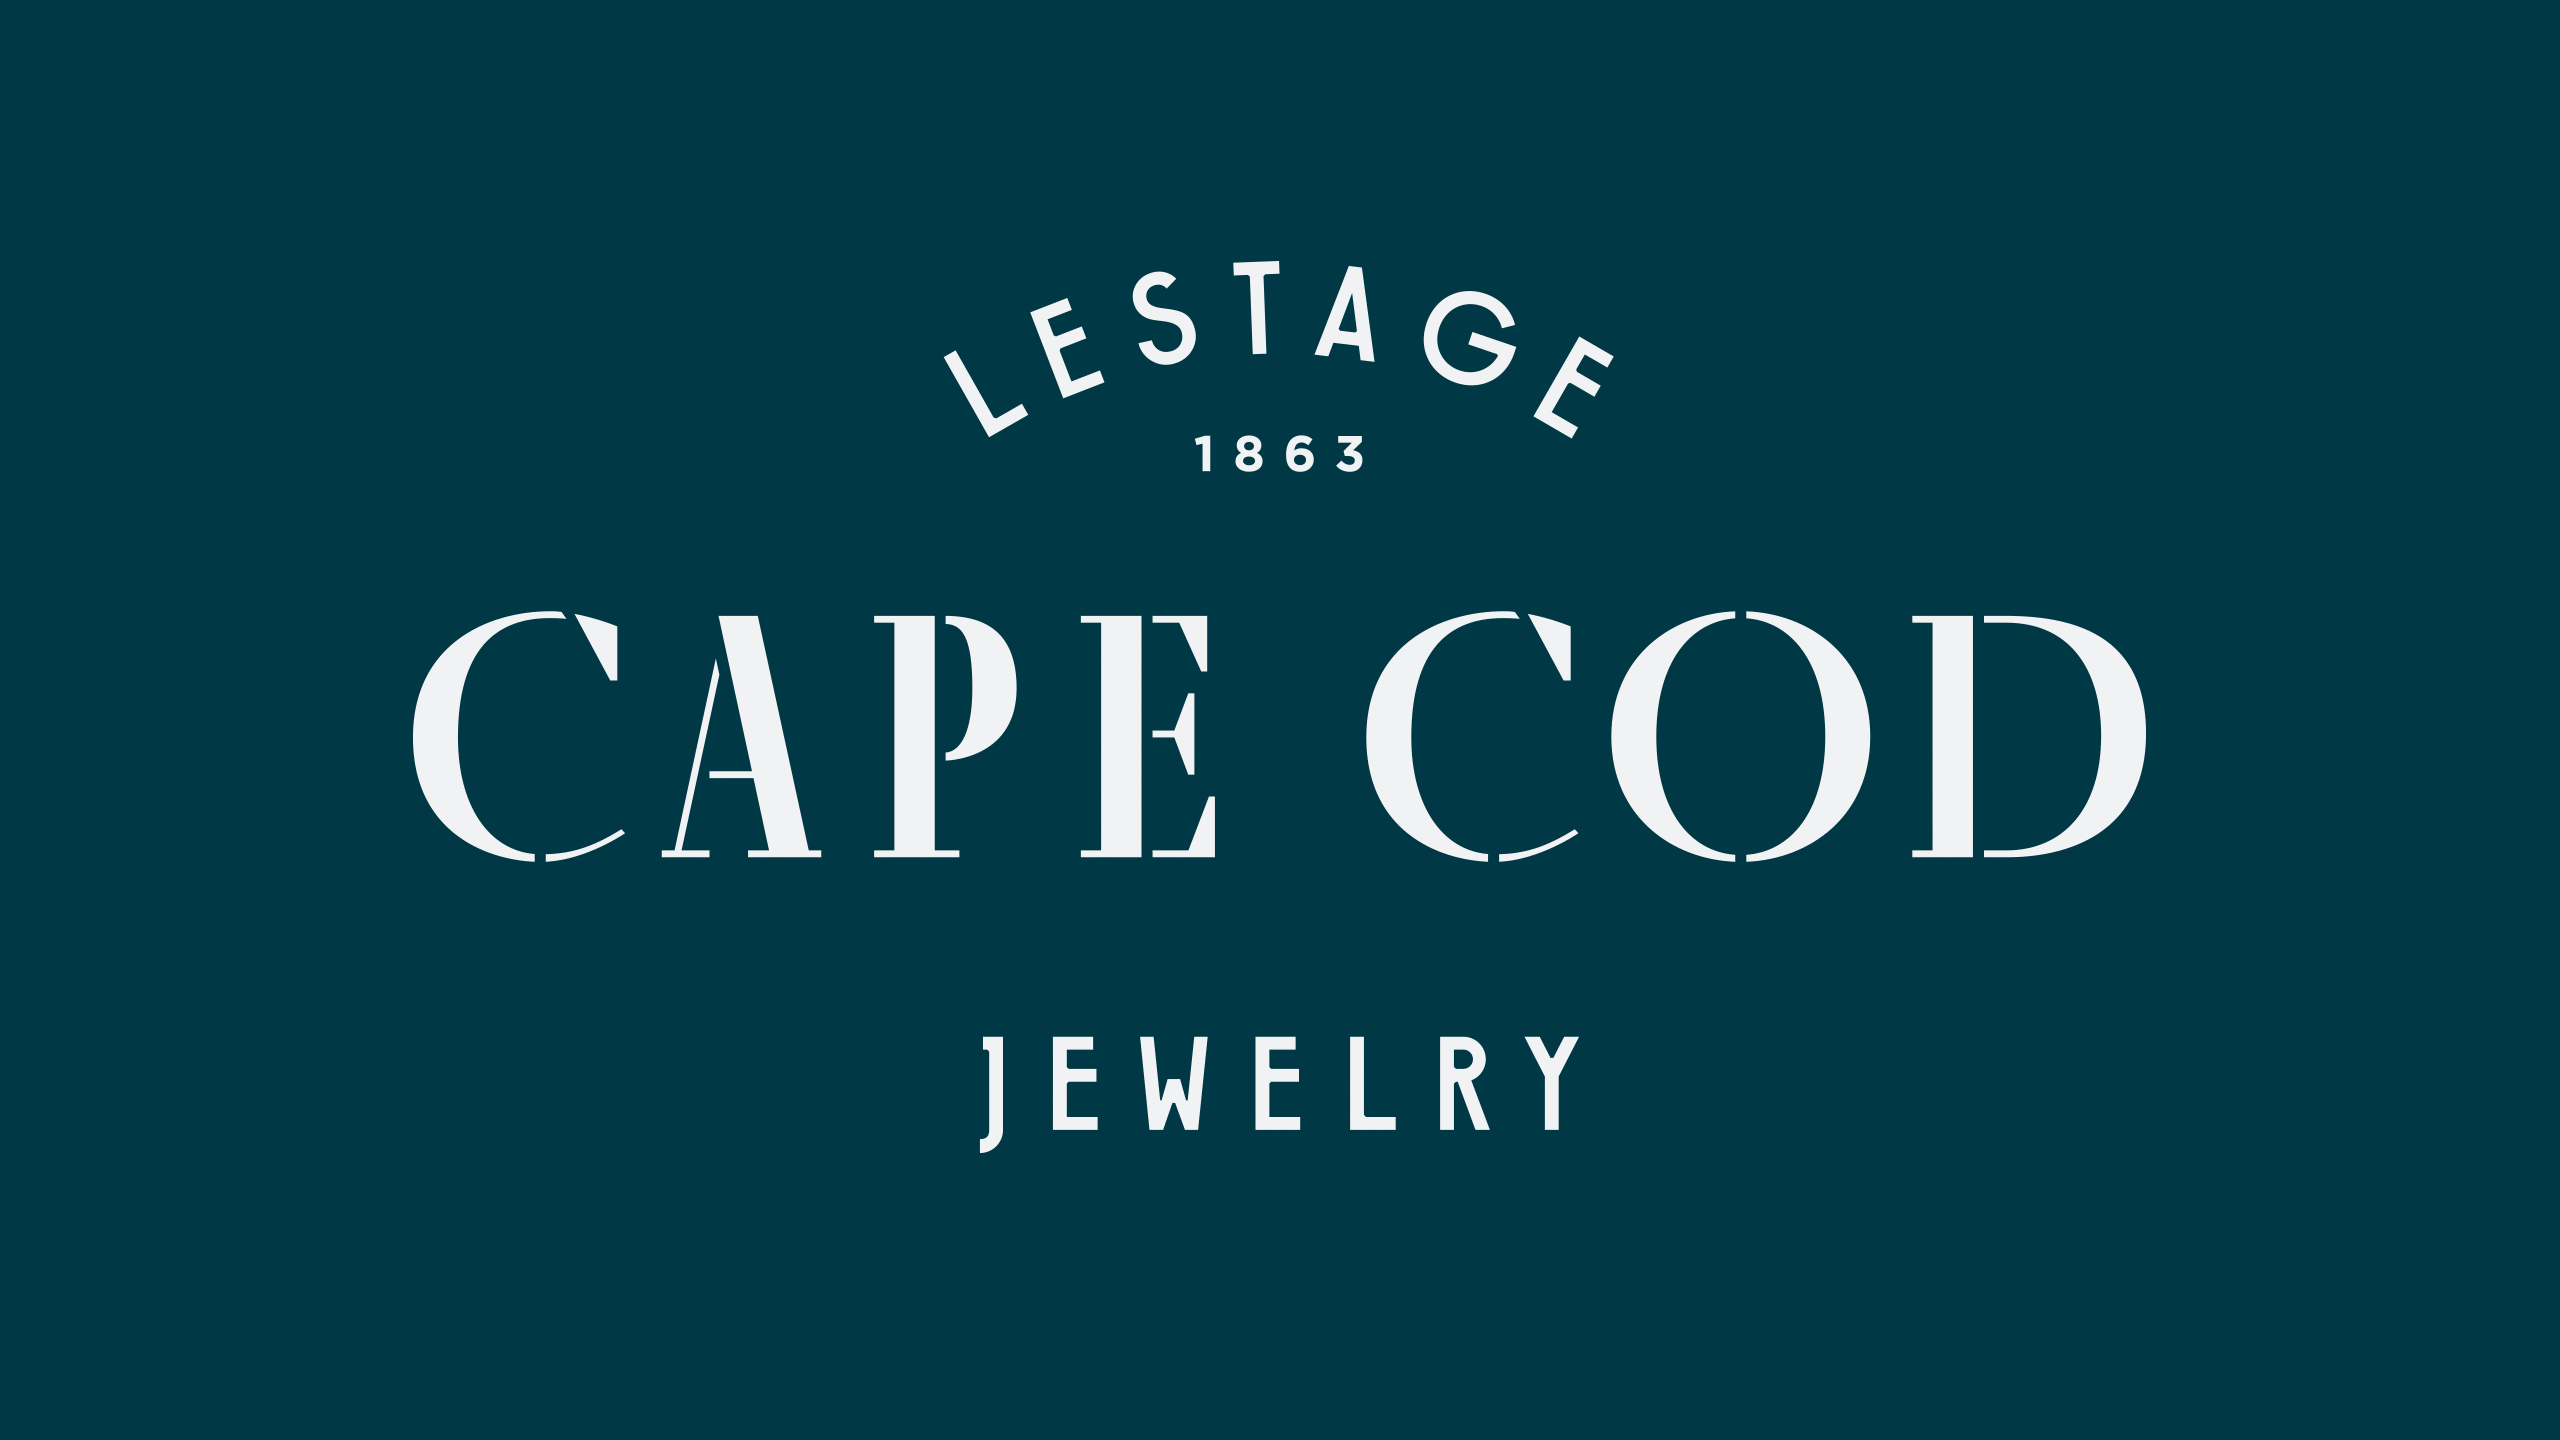 LeStage Cape Cod Jewelry